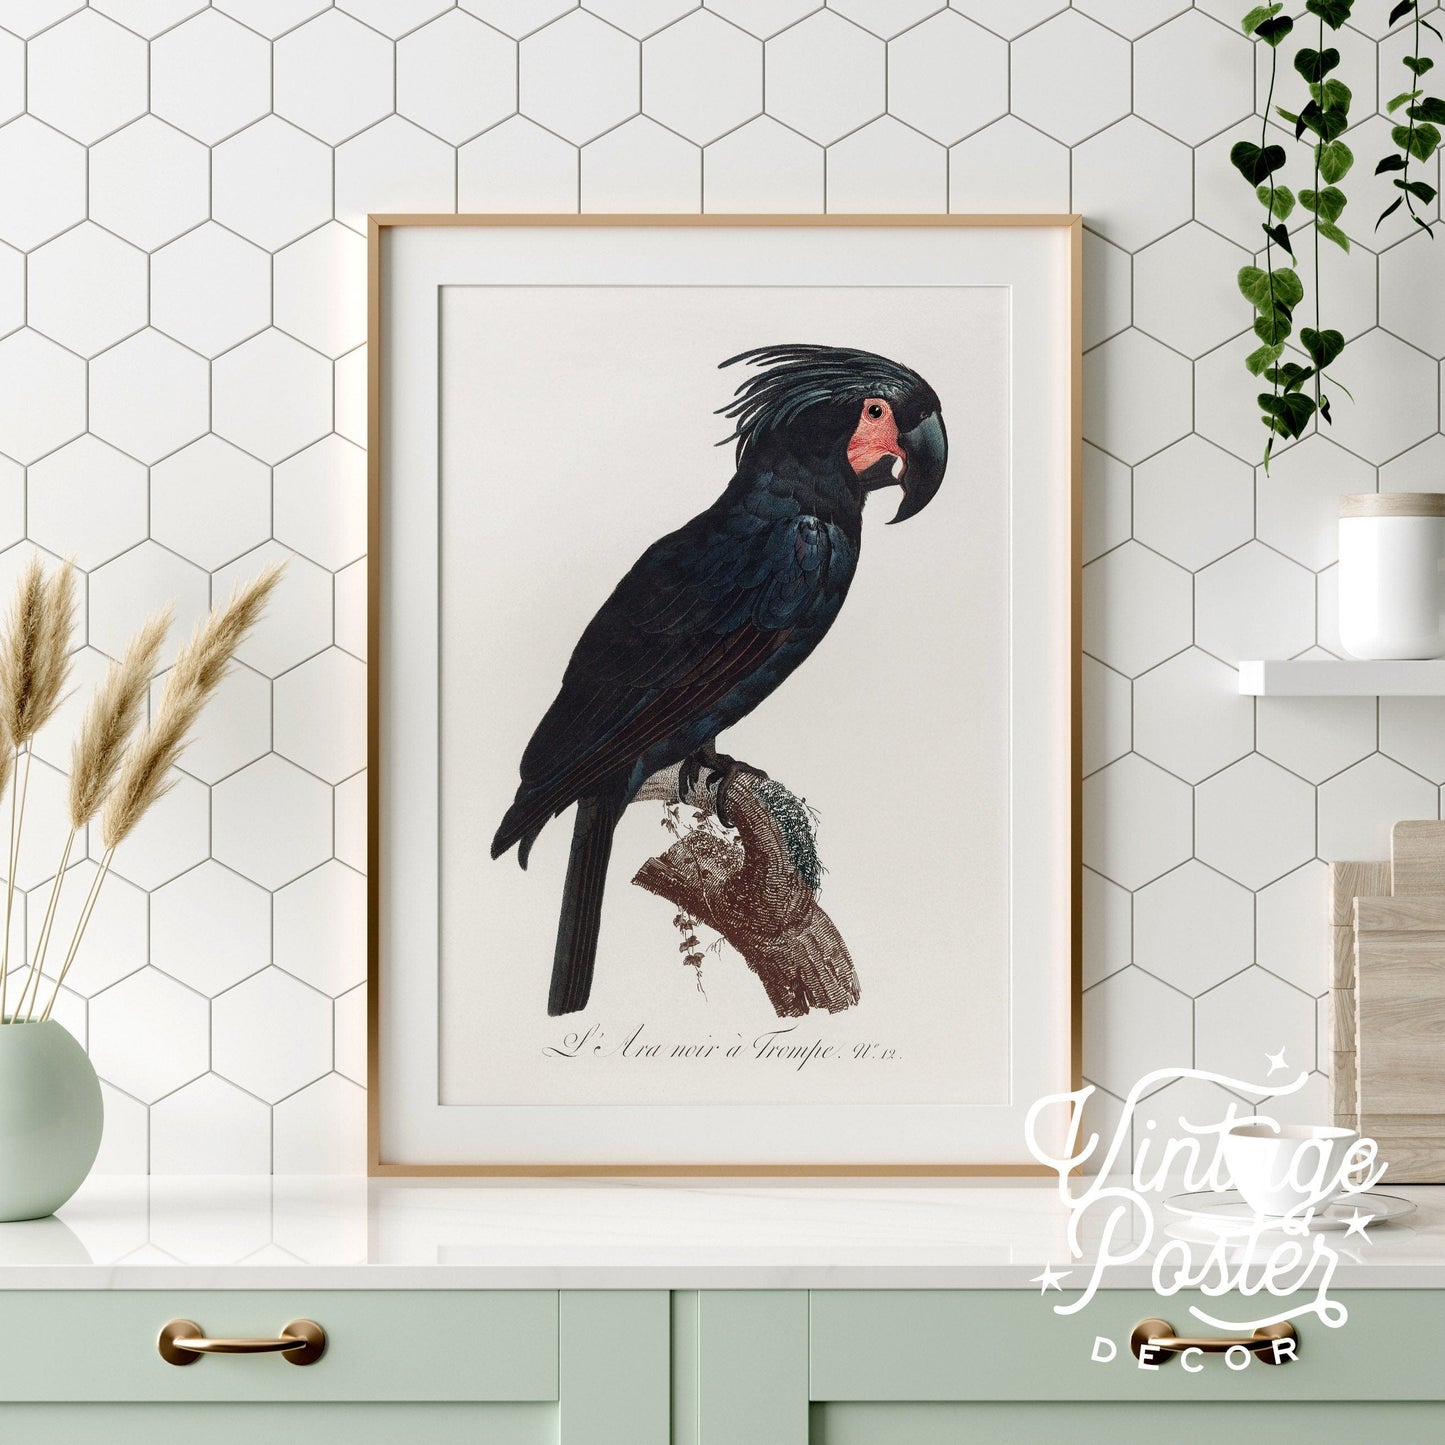 Home Poster Decor Black Bird Wall Art, Parrot Print, Vintage Bird Poster, Cockatoo Print, Antique Bird Art, Gift Idea, High Quality Paper, Vintage Bird